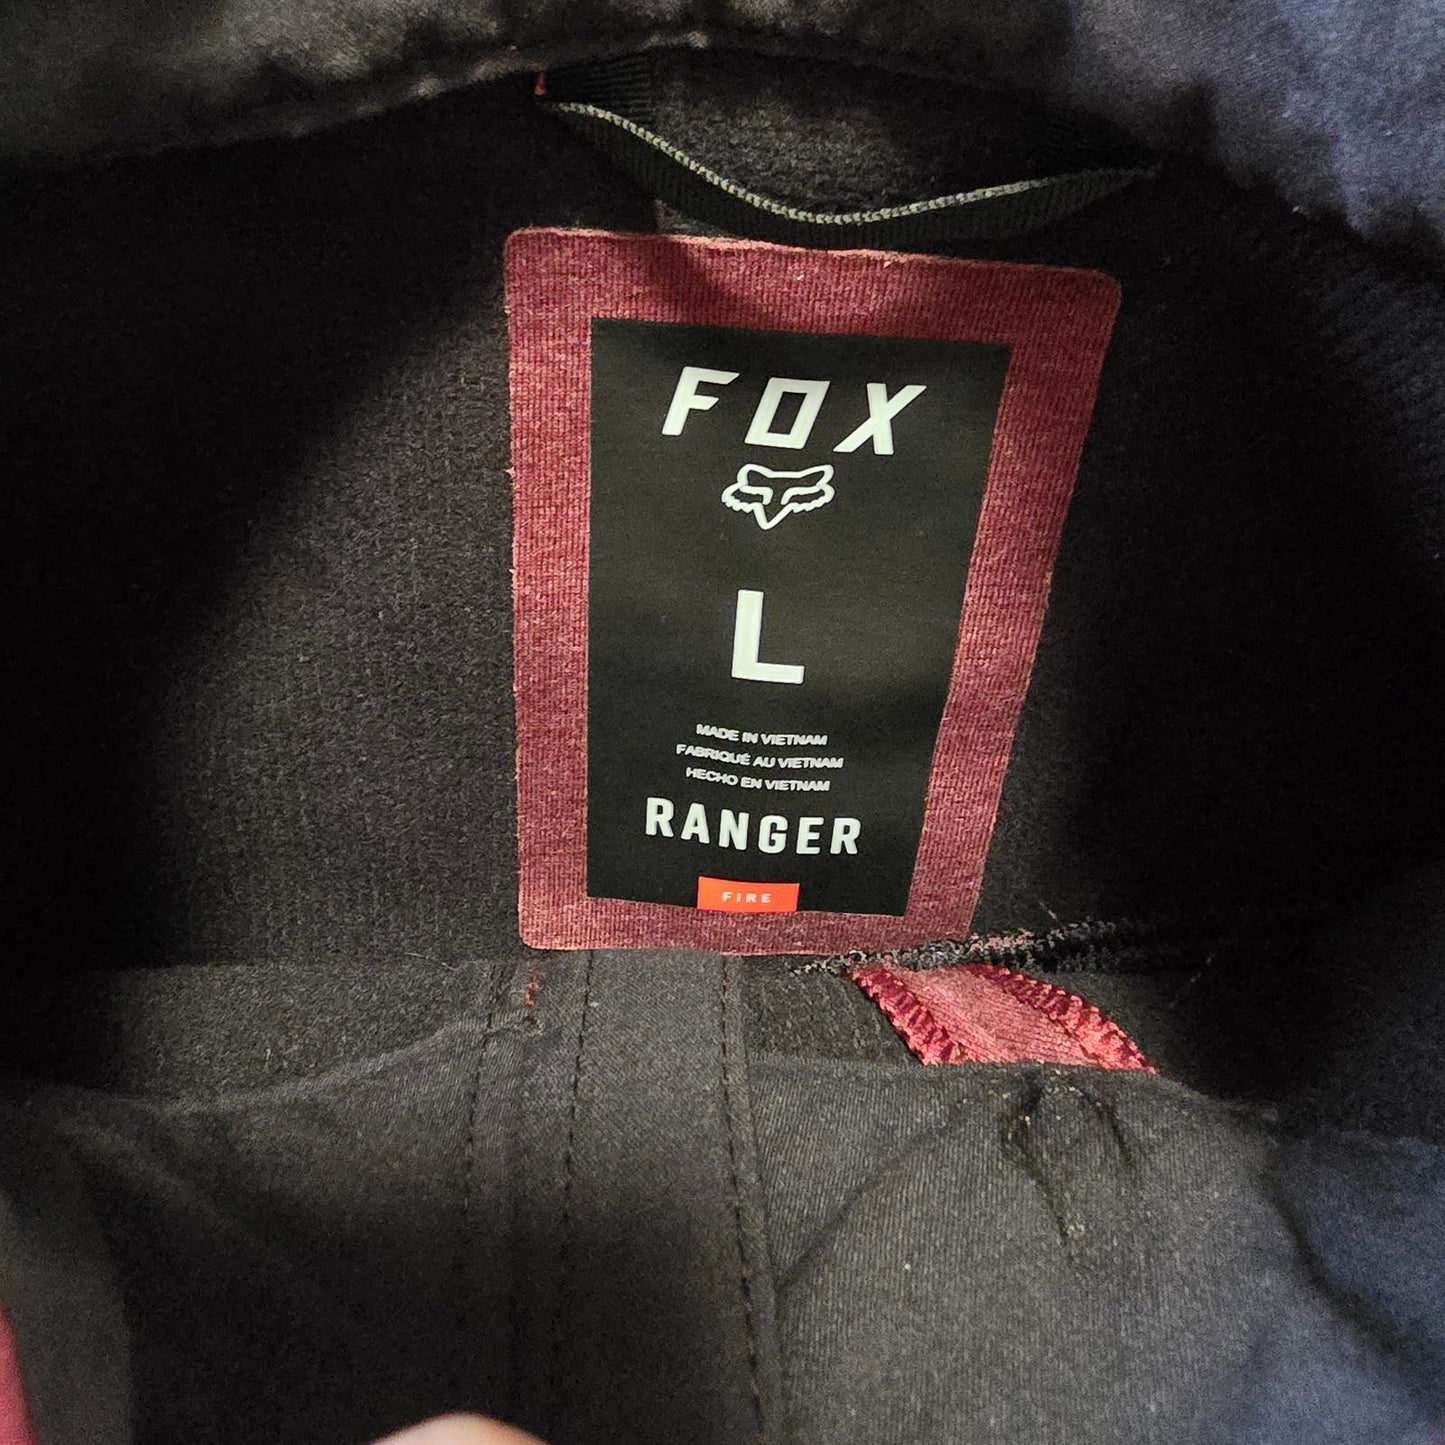 Fox Racing Ranger Fire Jacket in Dark Maroon - Size Large